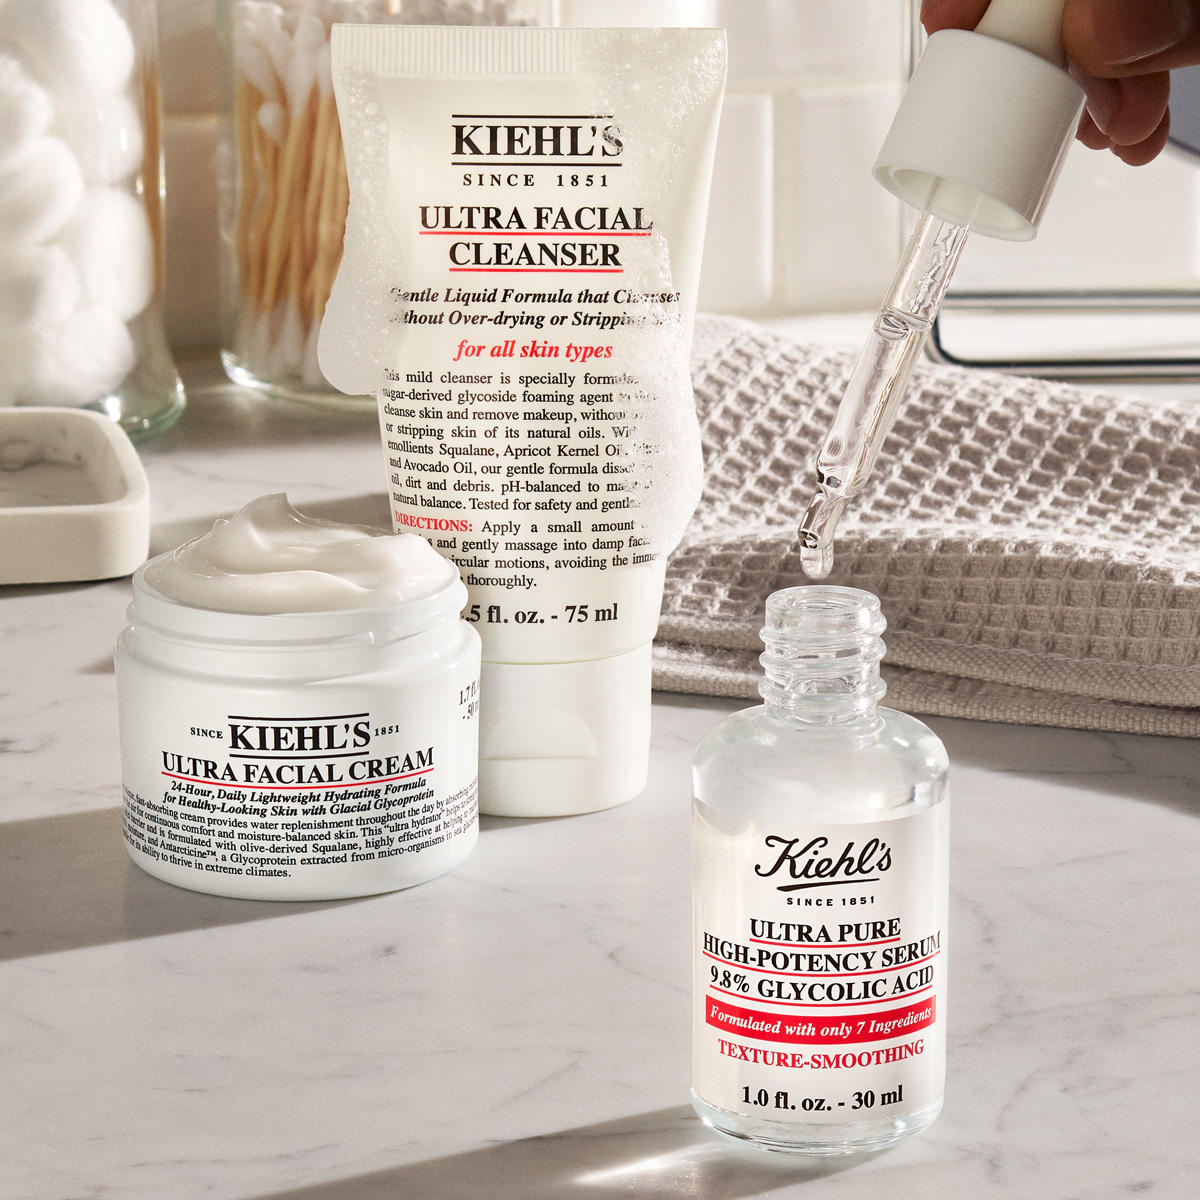 Kiehl's Ultra Pure High-Potency Serum 9,8% Glycolic Acid 30 ml - 6